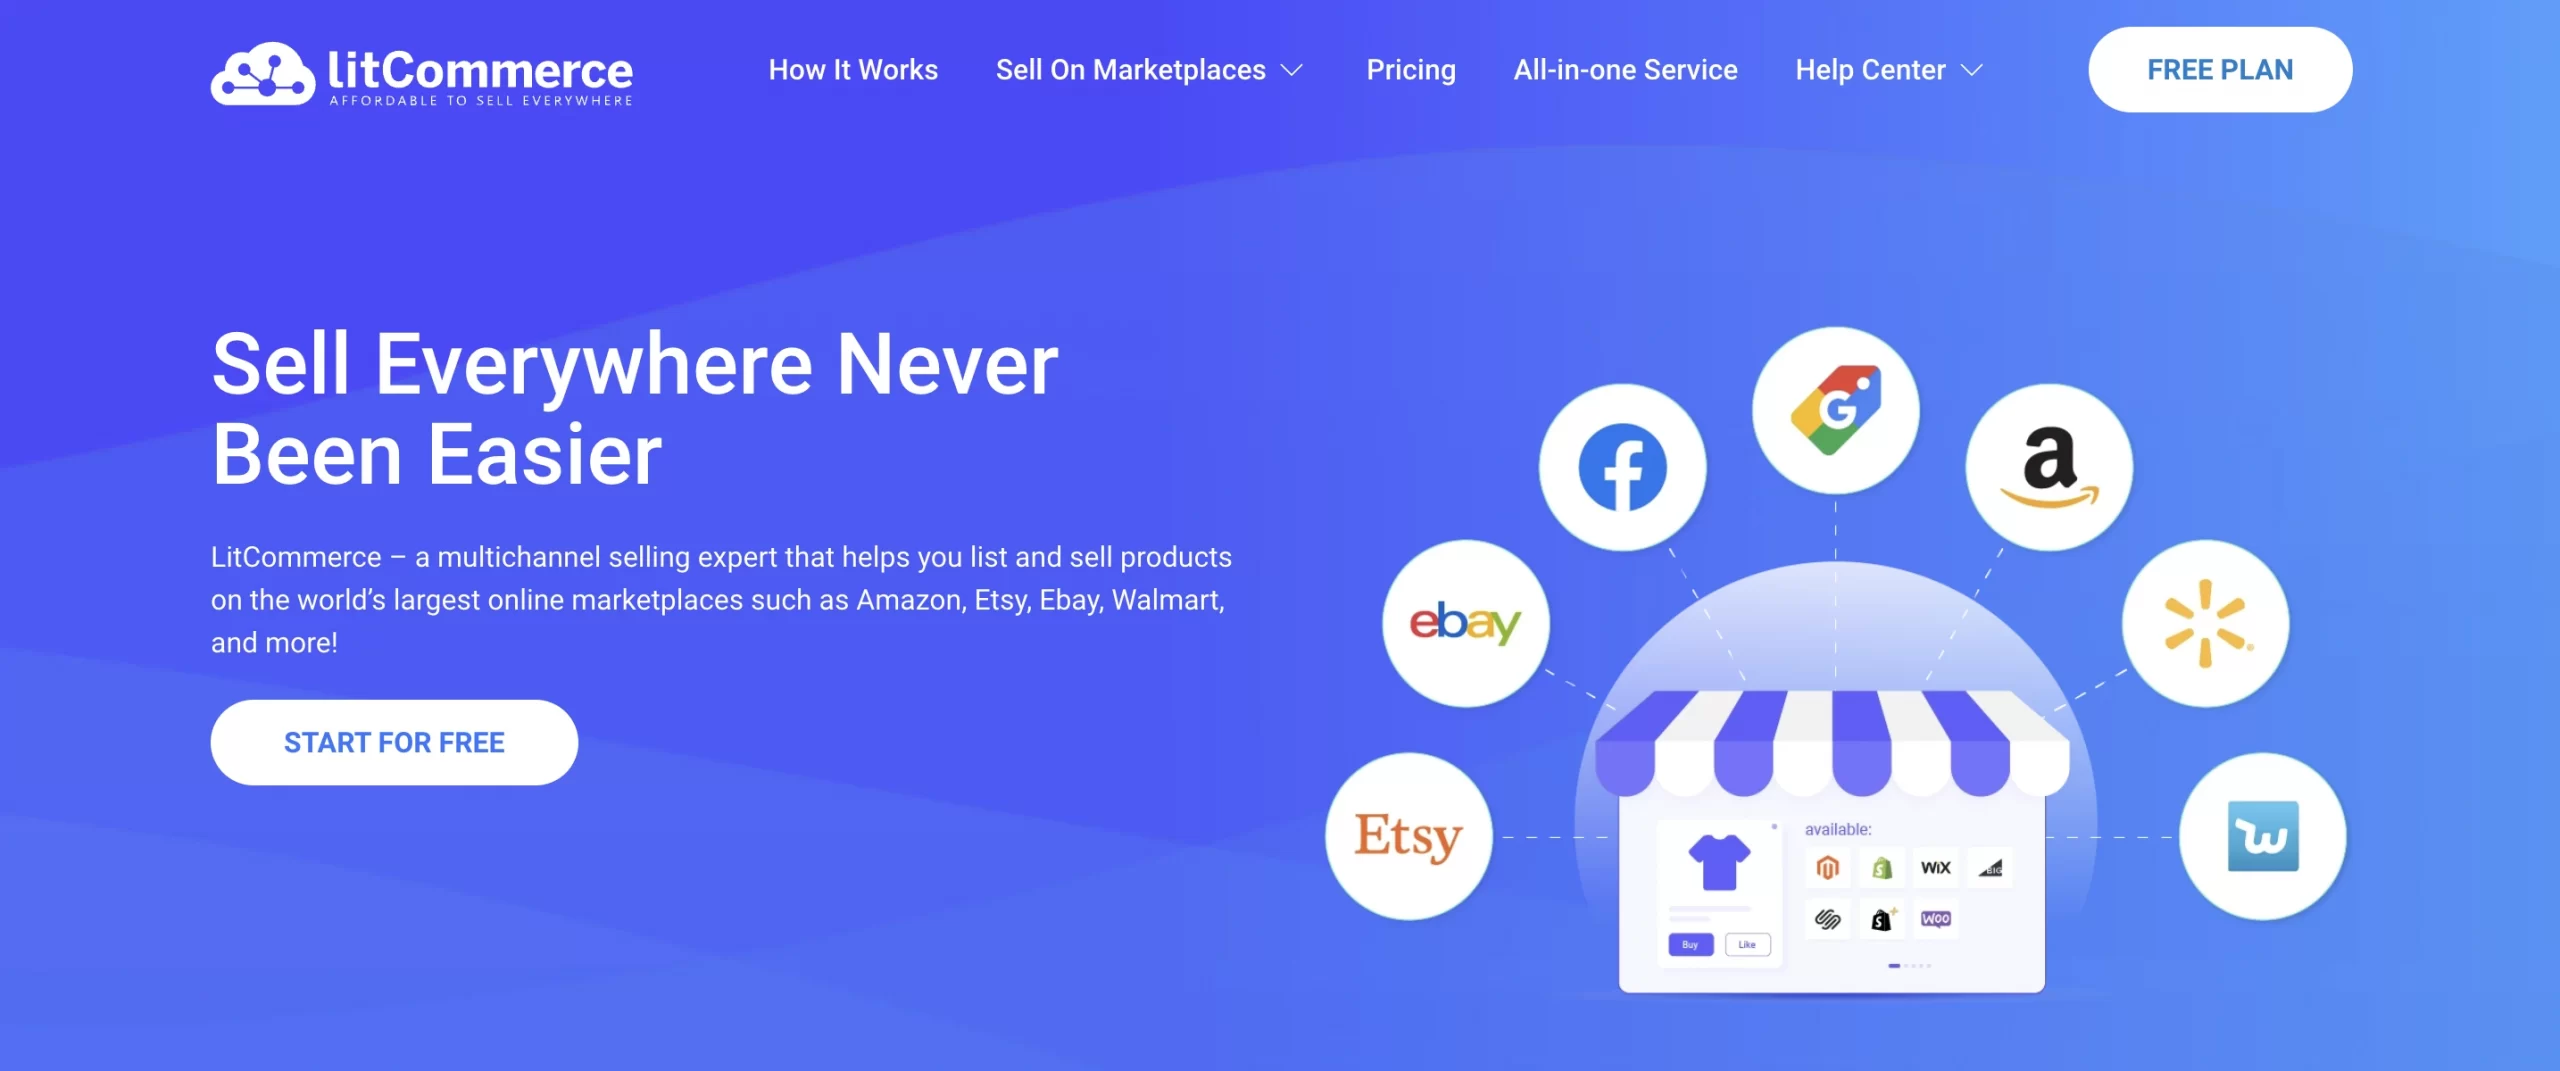 selling globally on Etsy, eBay, Amazon with LitCommerce